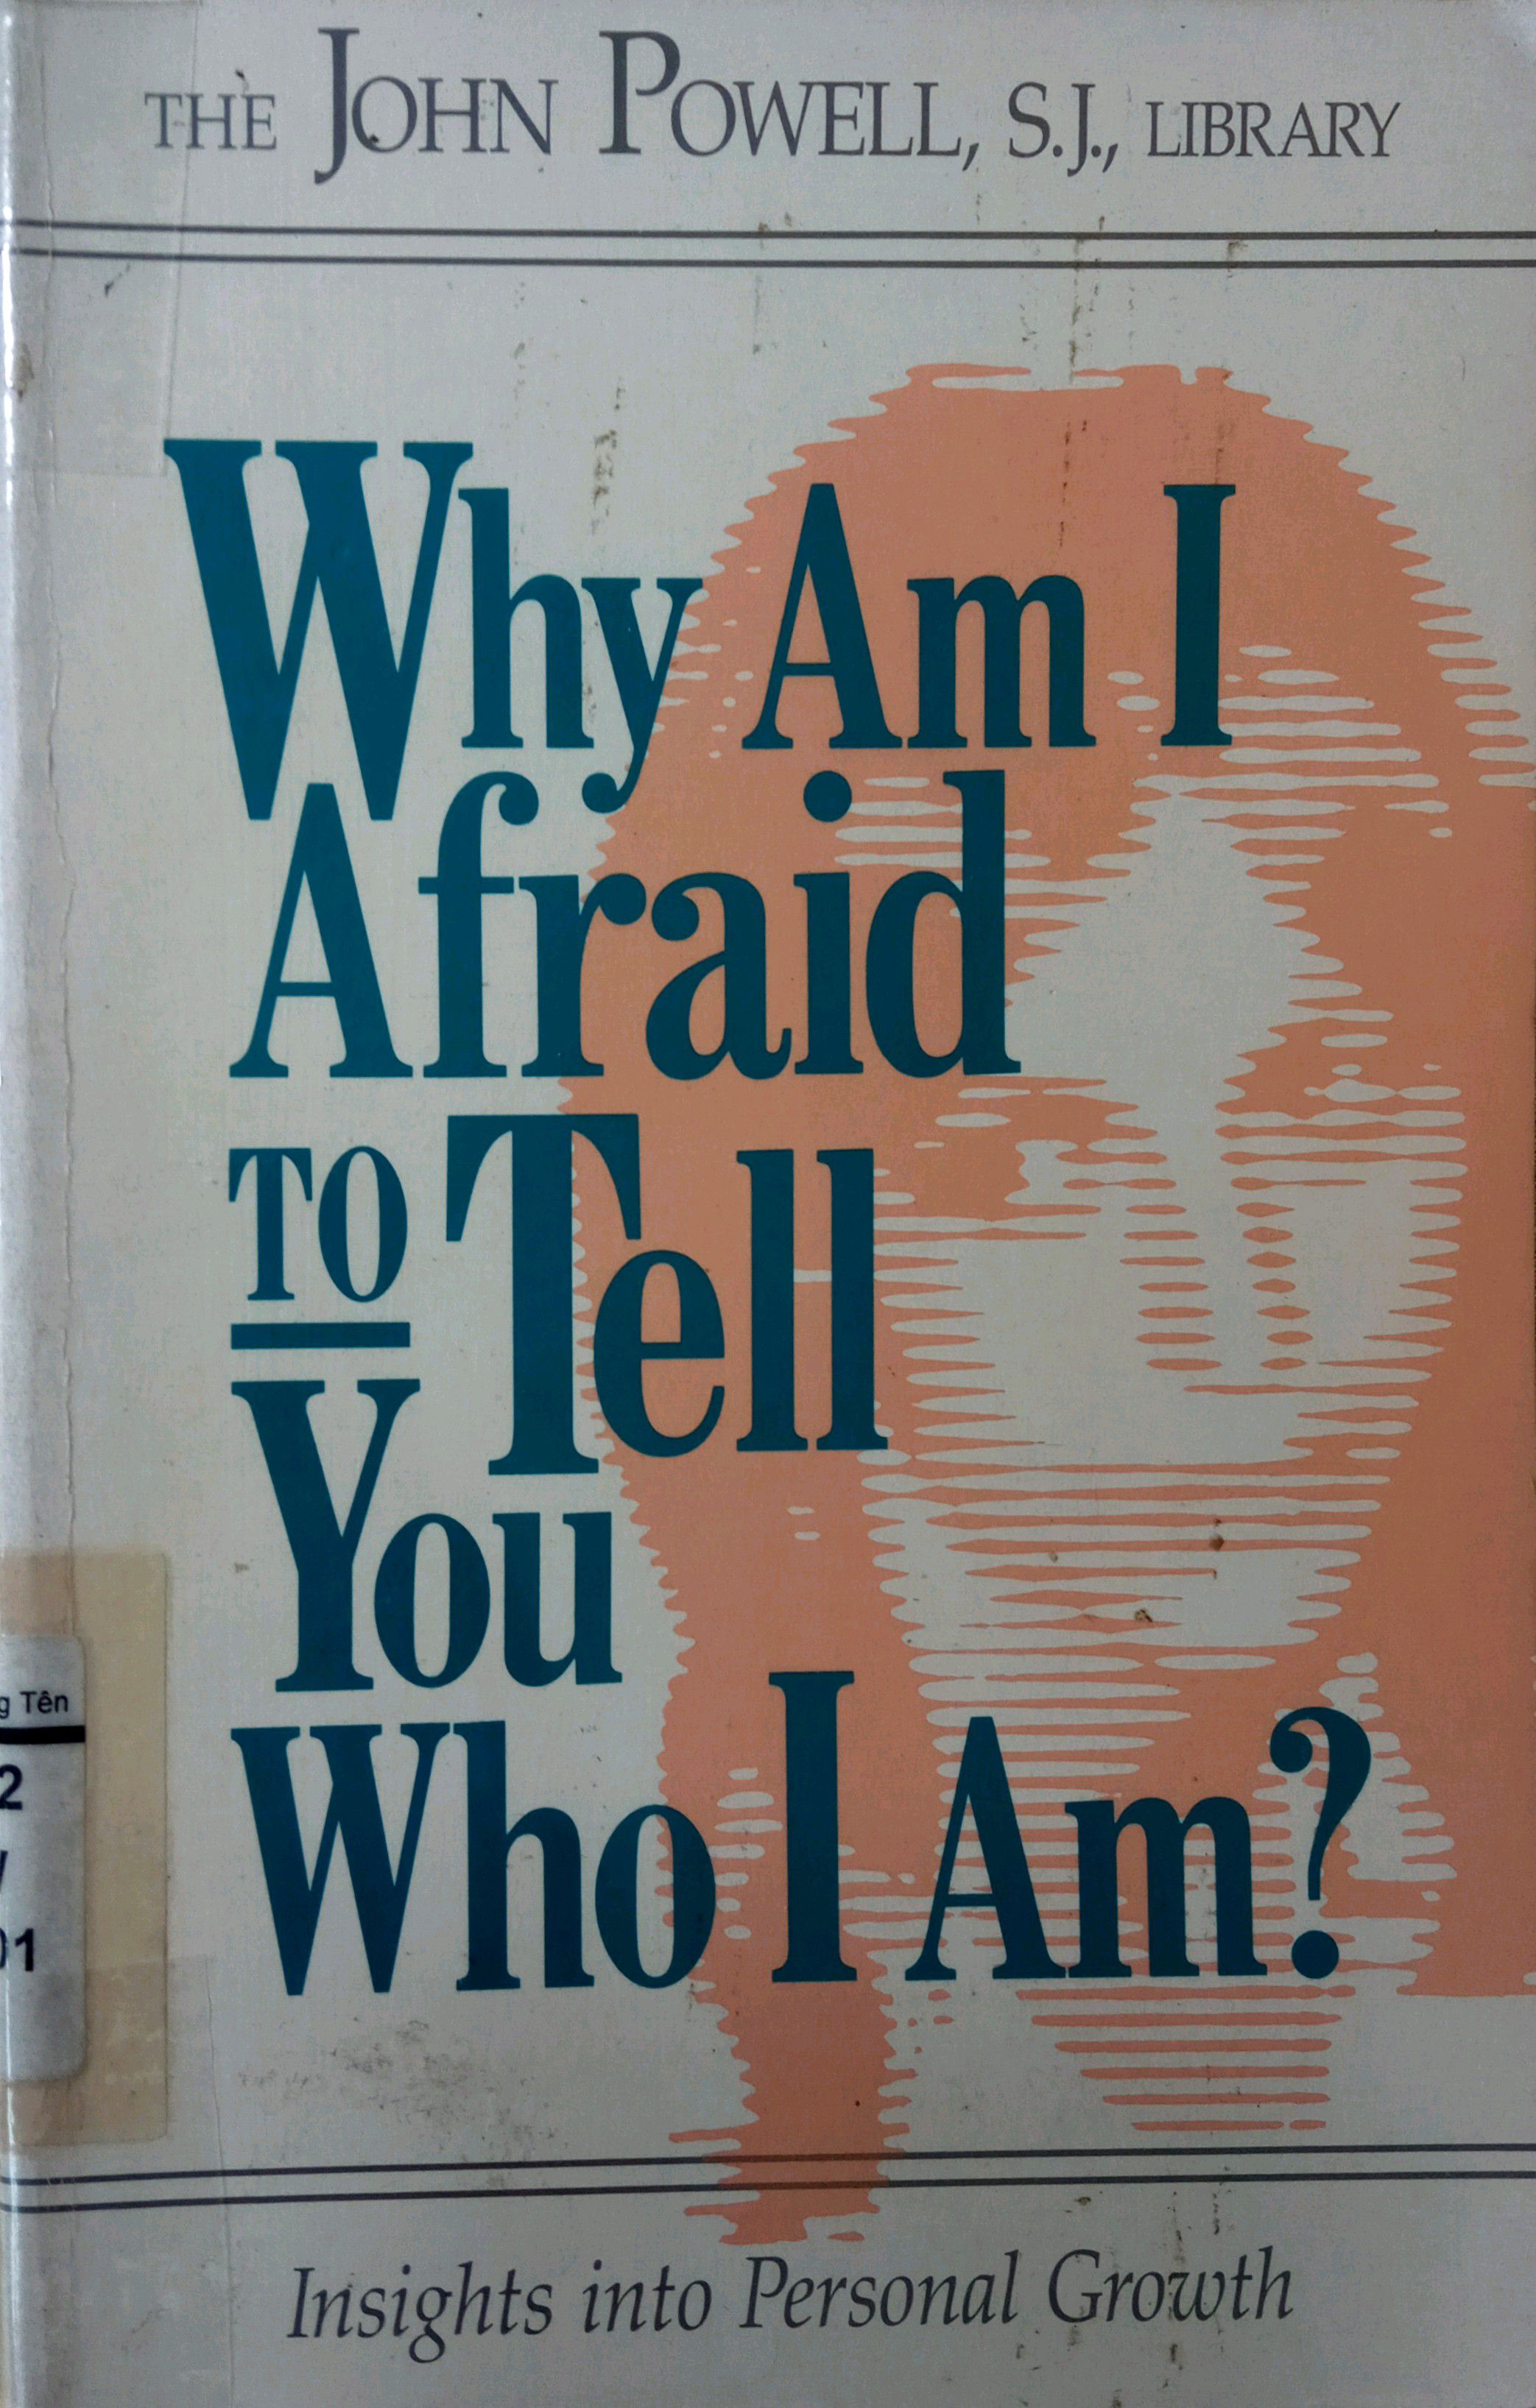 WHY AM I AFRAID TO TELL YOU WHO I AM?